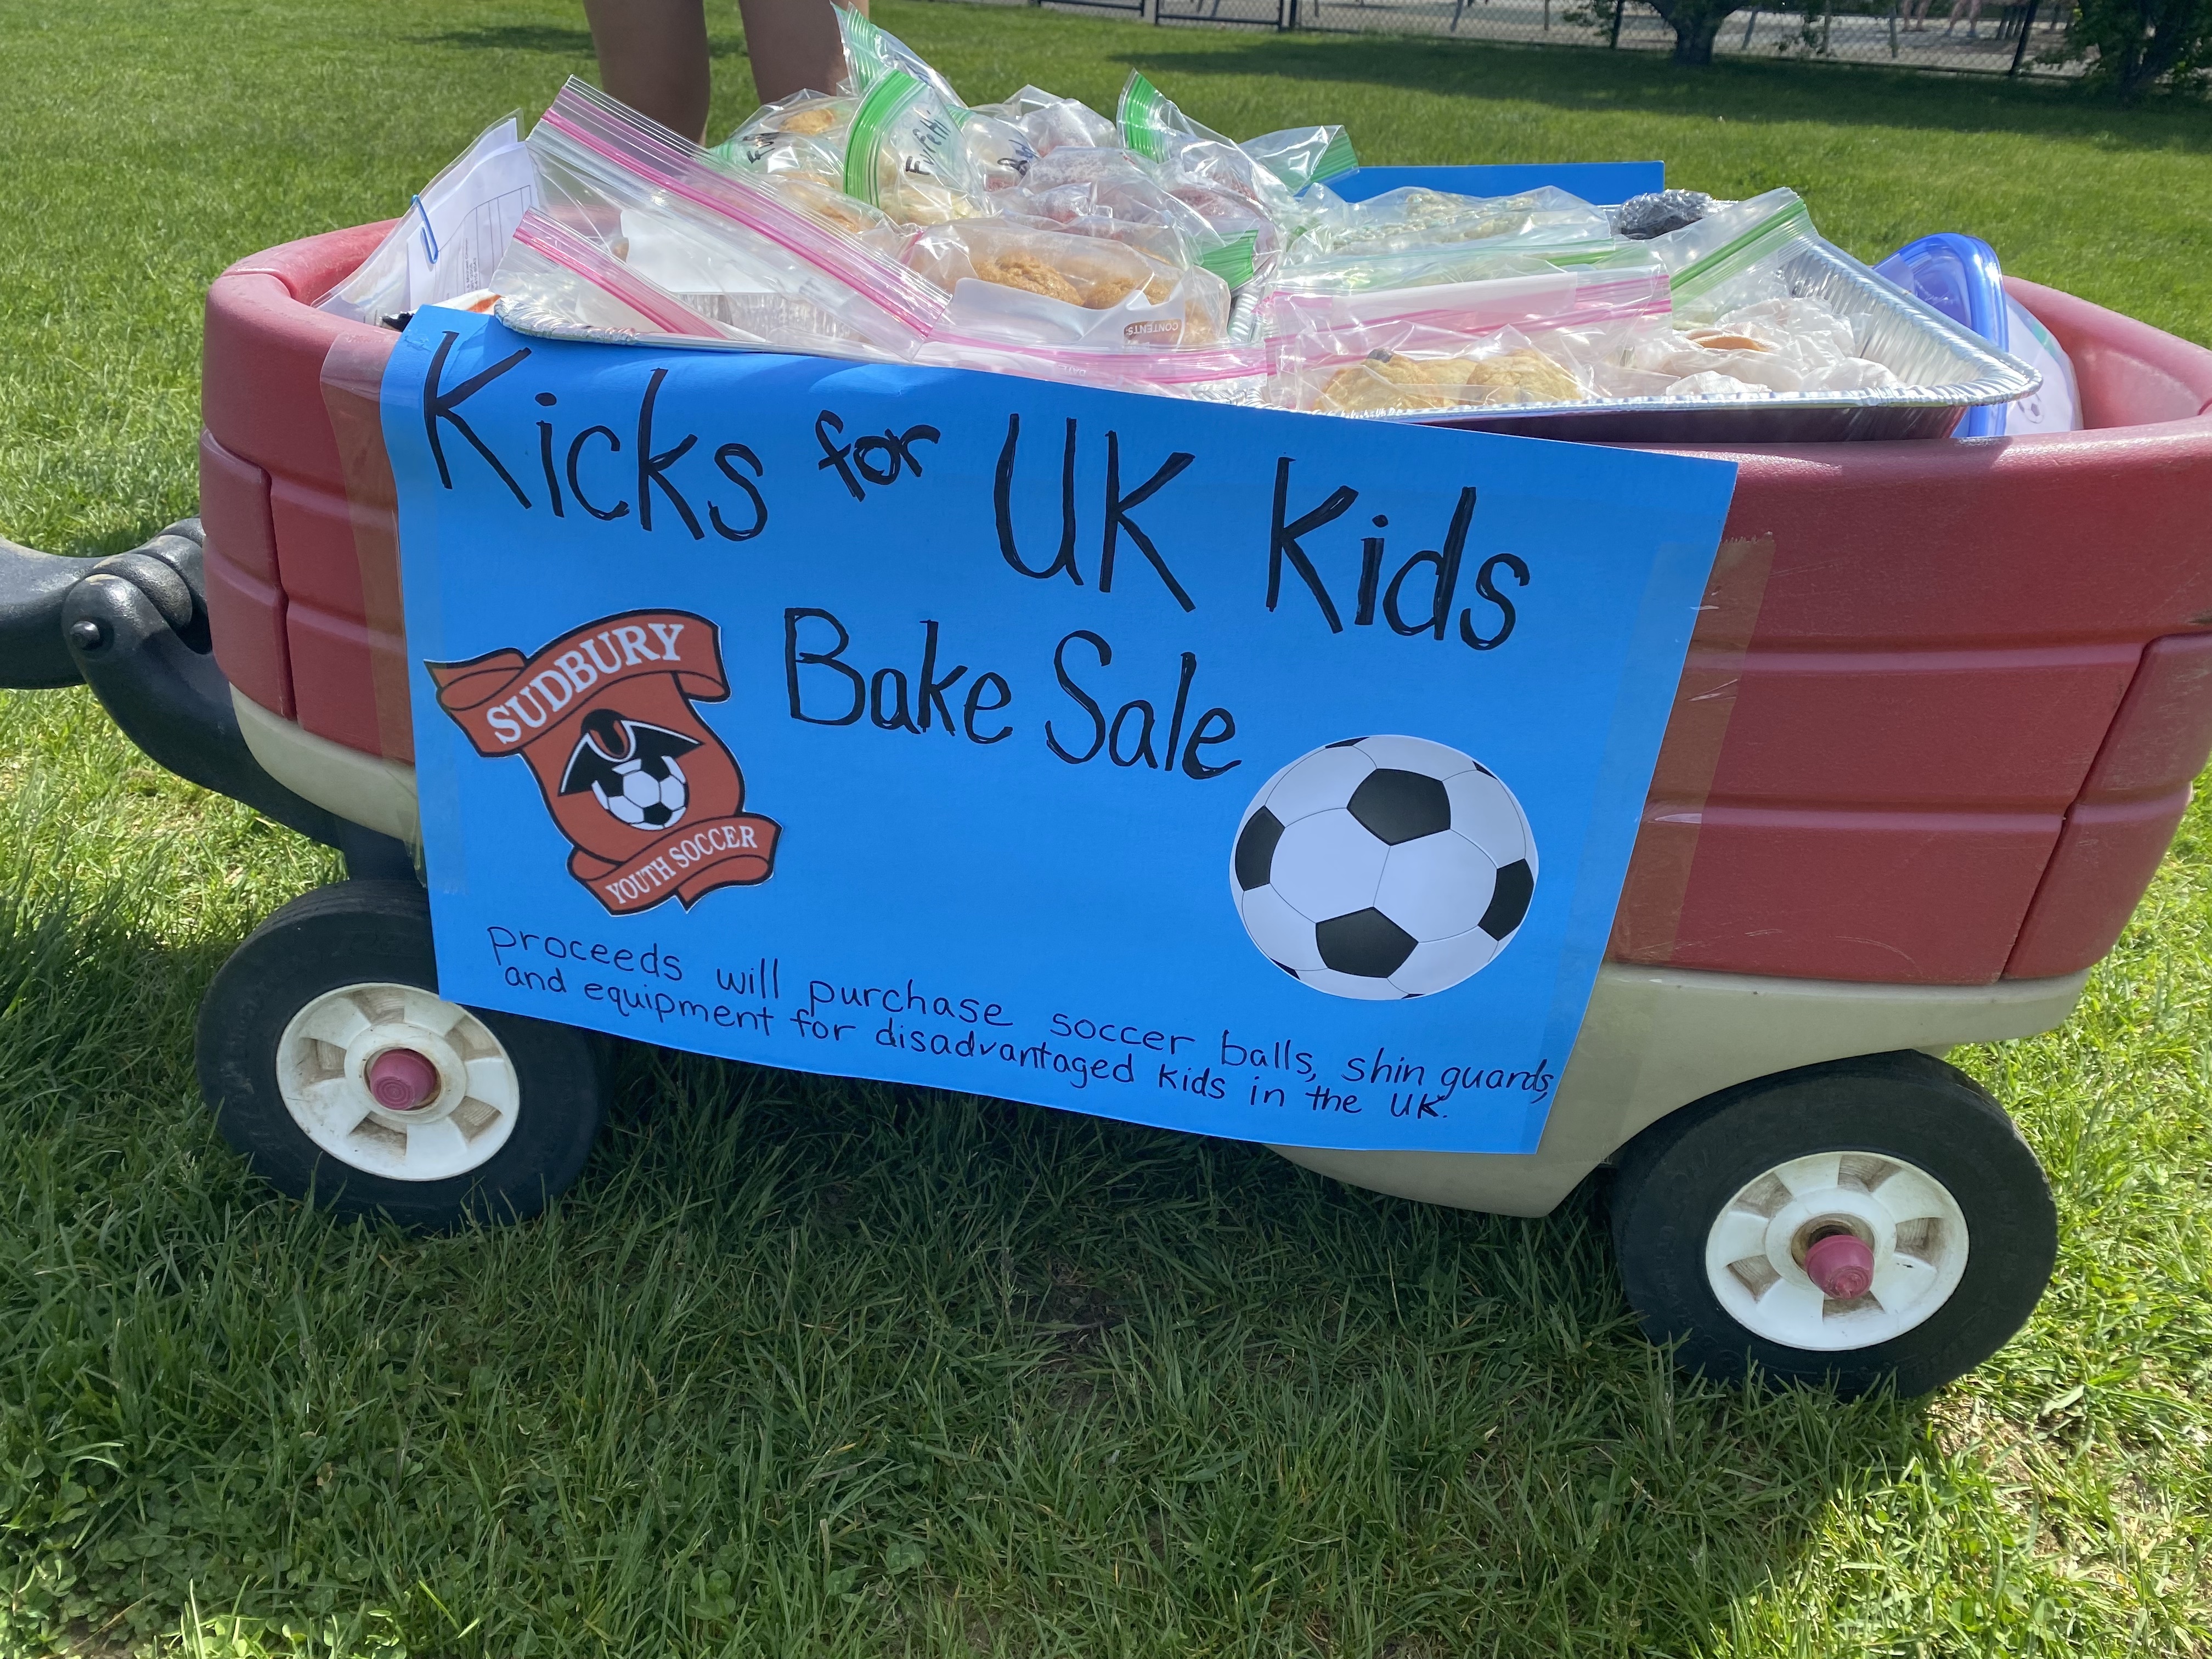 5/14-5/15 Bake Sale for UK kids